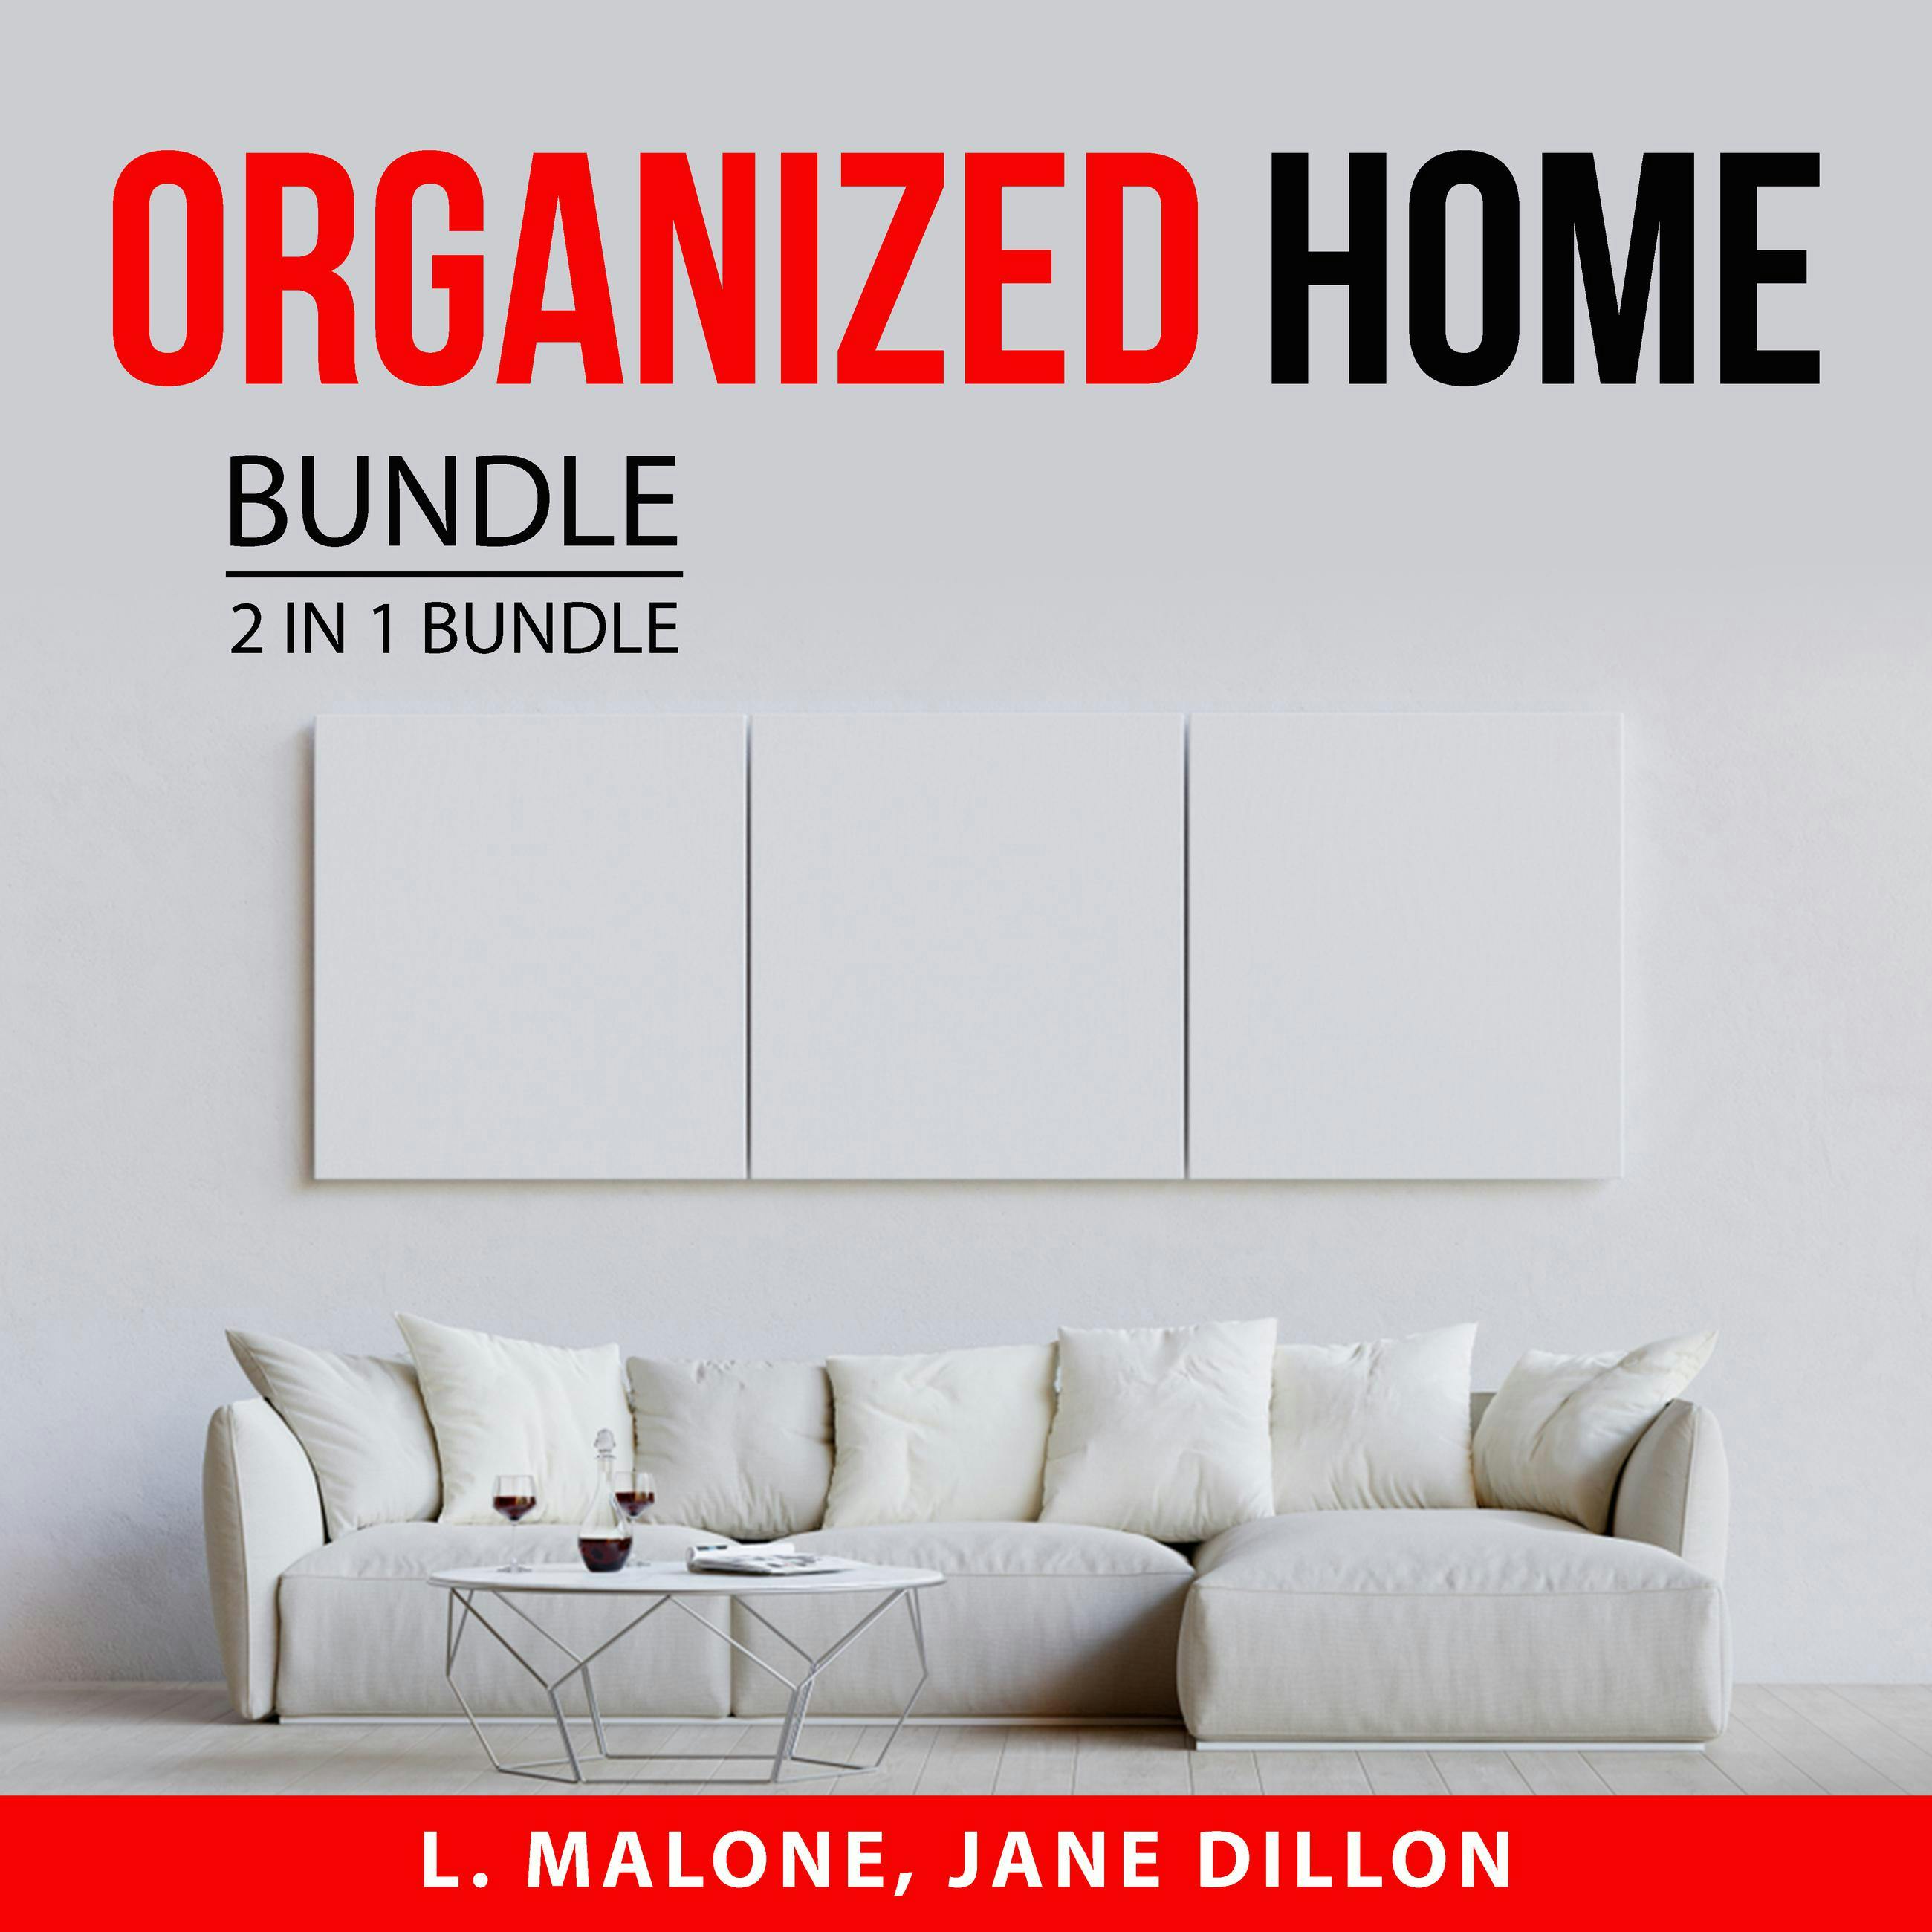 Organized Home Bundle, 2 in 1 Bundle: Secrets to a Clean and Organized Home, and Declutter and Organize Your Home - L. Malone, Jane Dillon